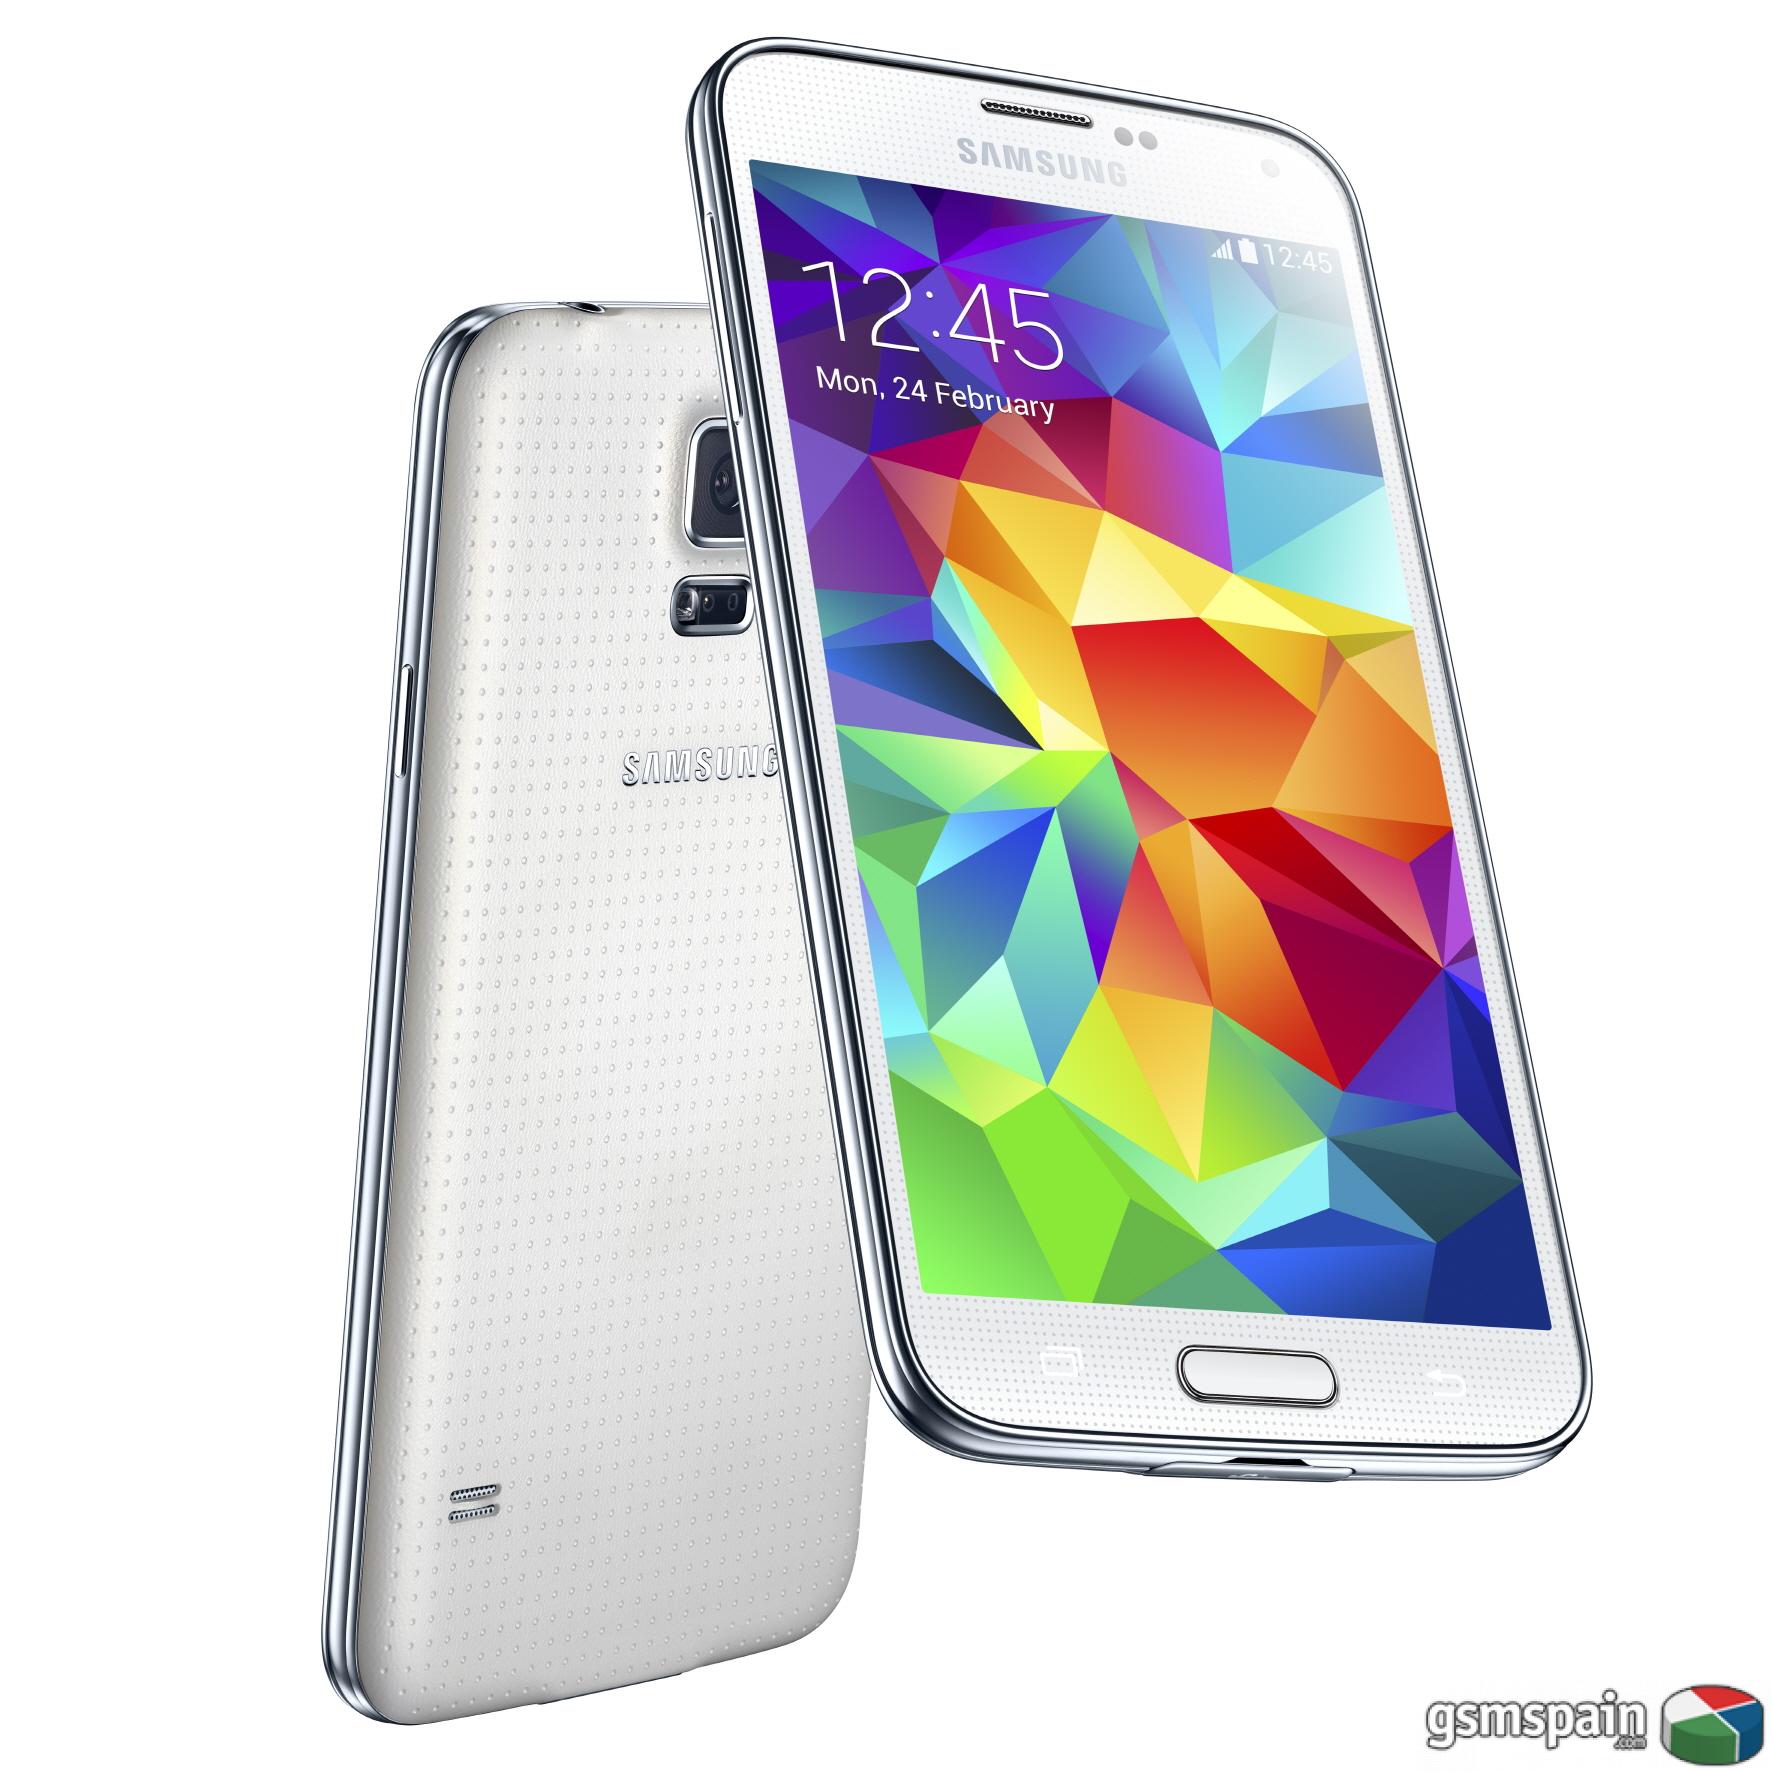 Samsung Galaxy S5 16GB Libre - www.movil21.com